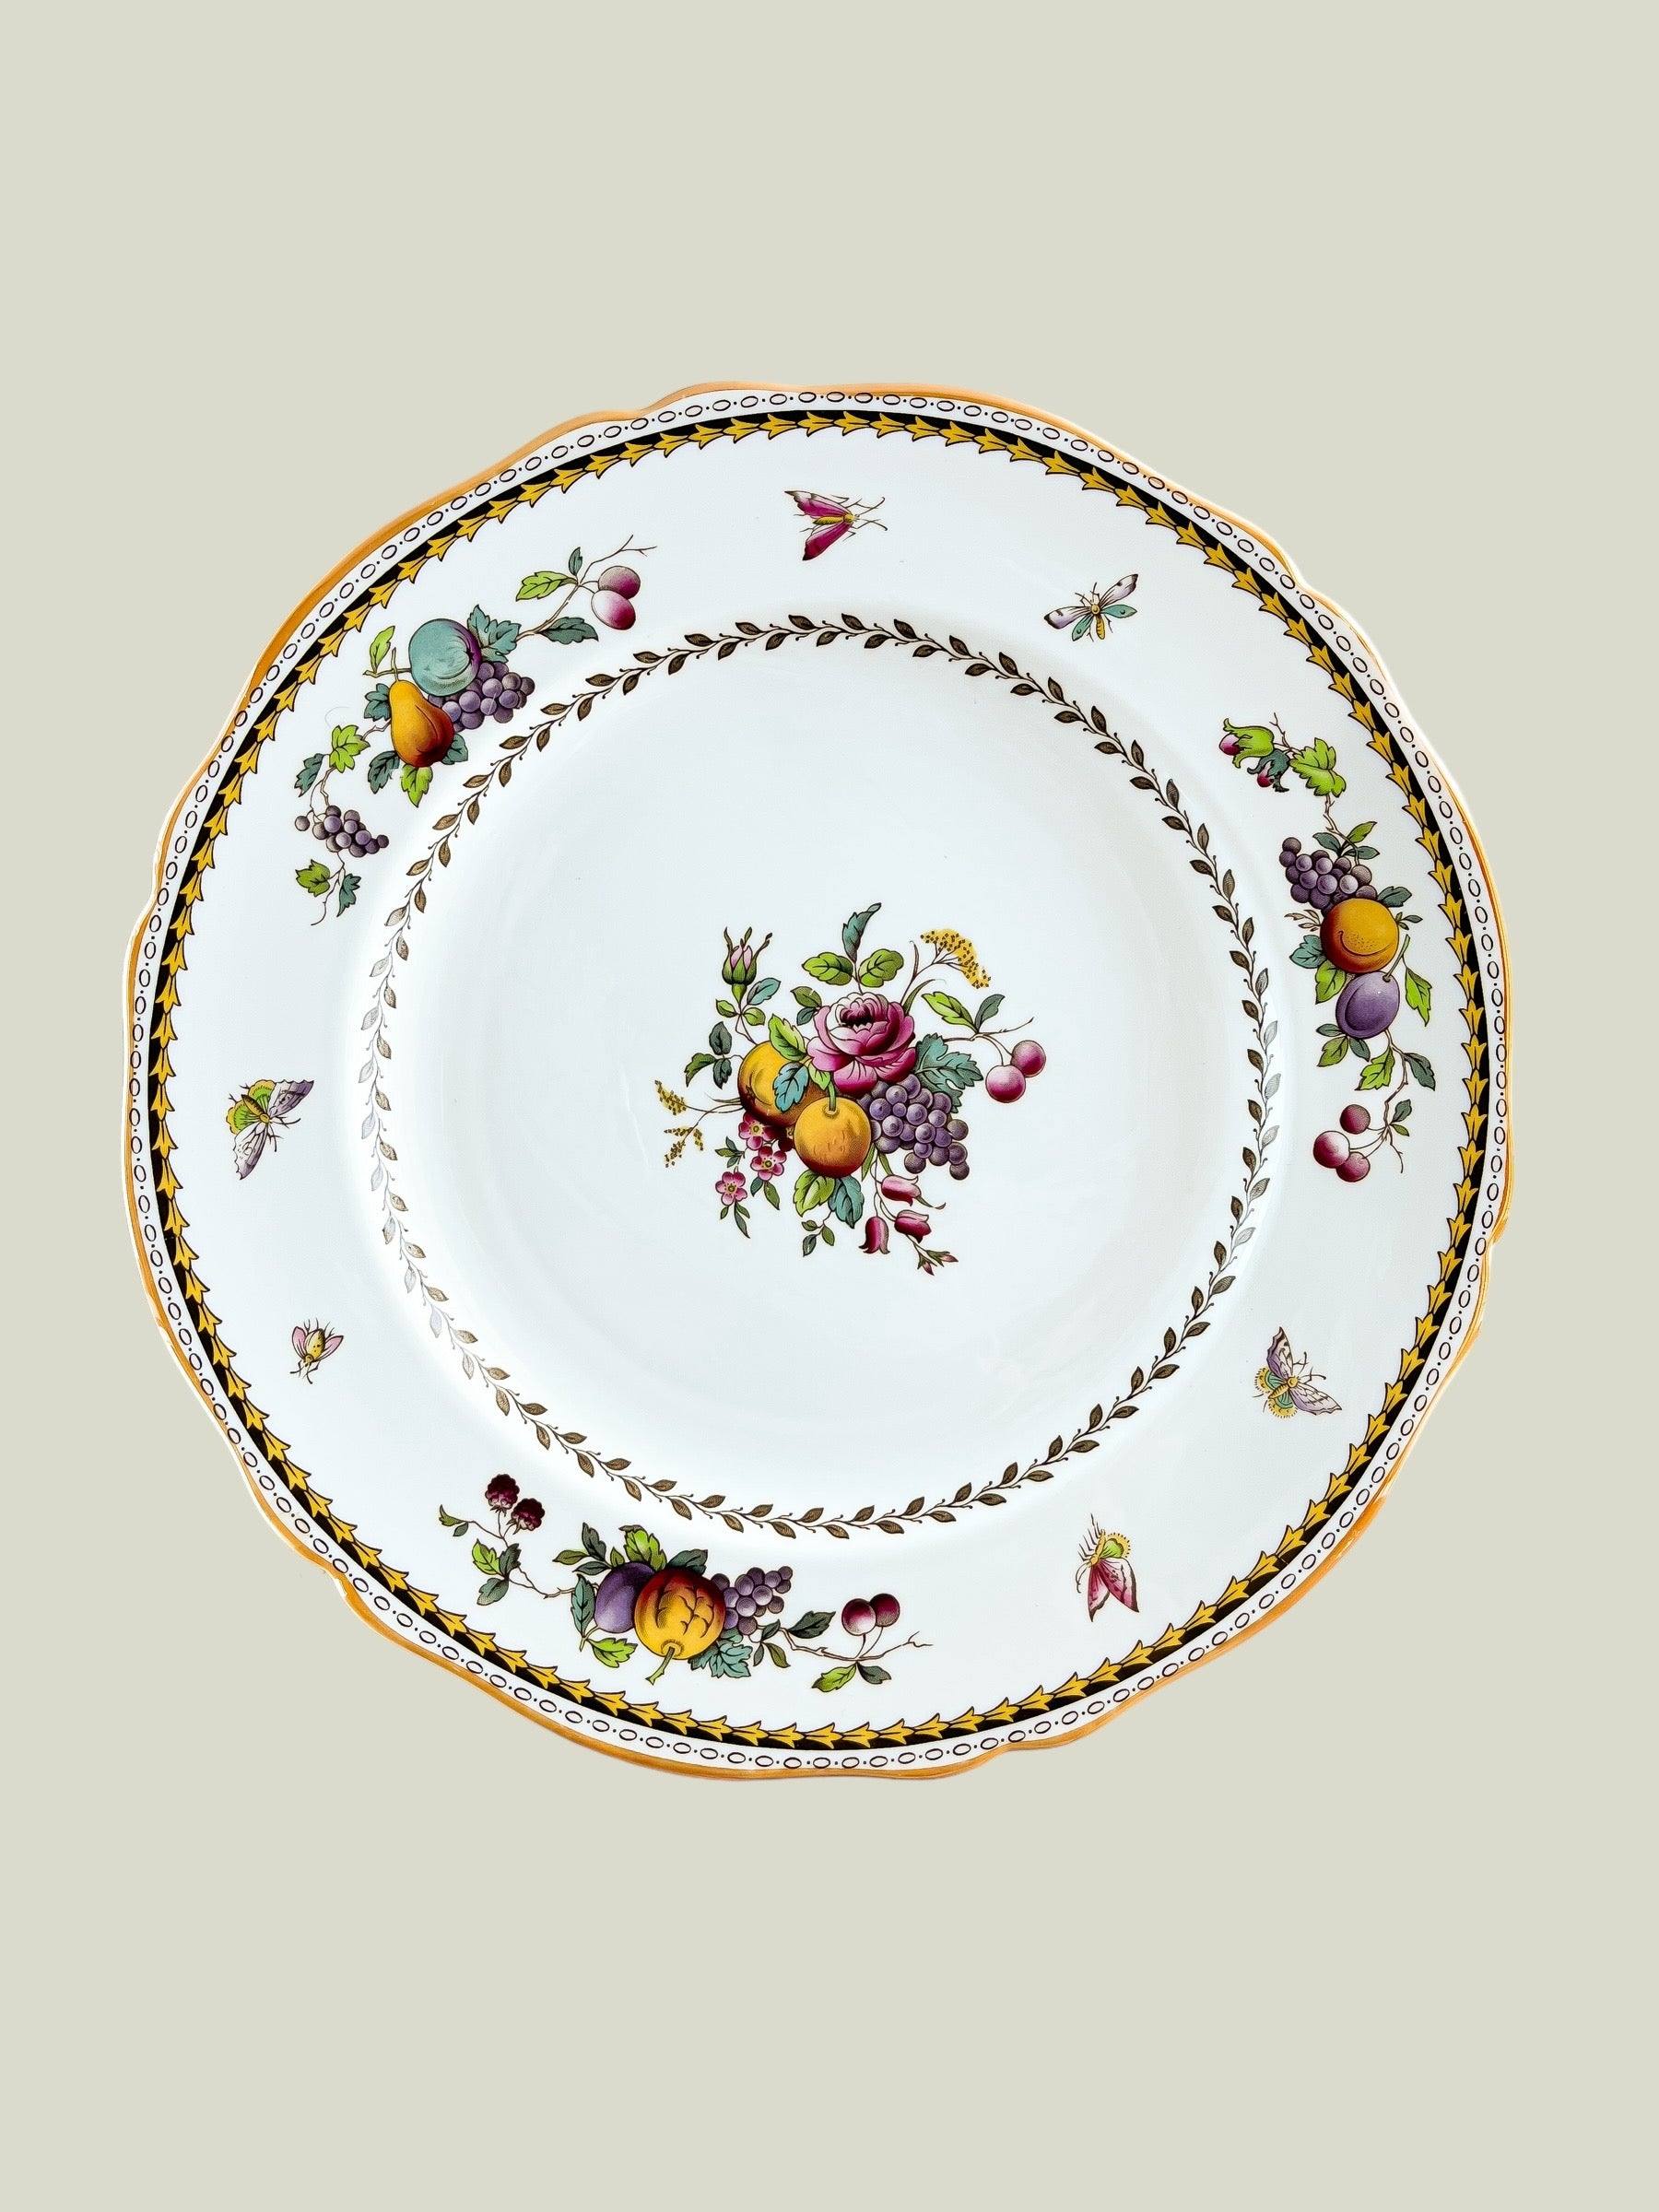 Spode Set of 6 Dinner Plates - ‘Rockingham’ Collection (Modern Version) - SOSC Home